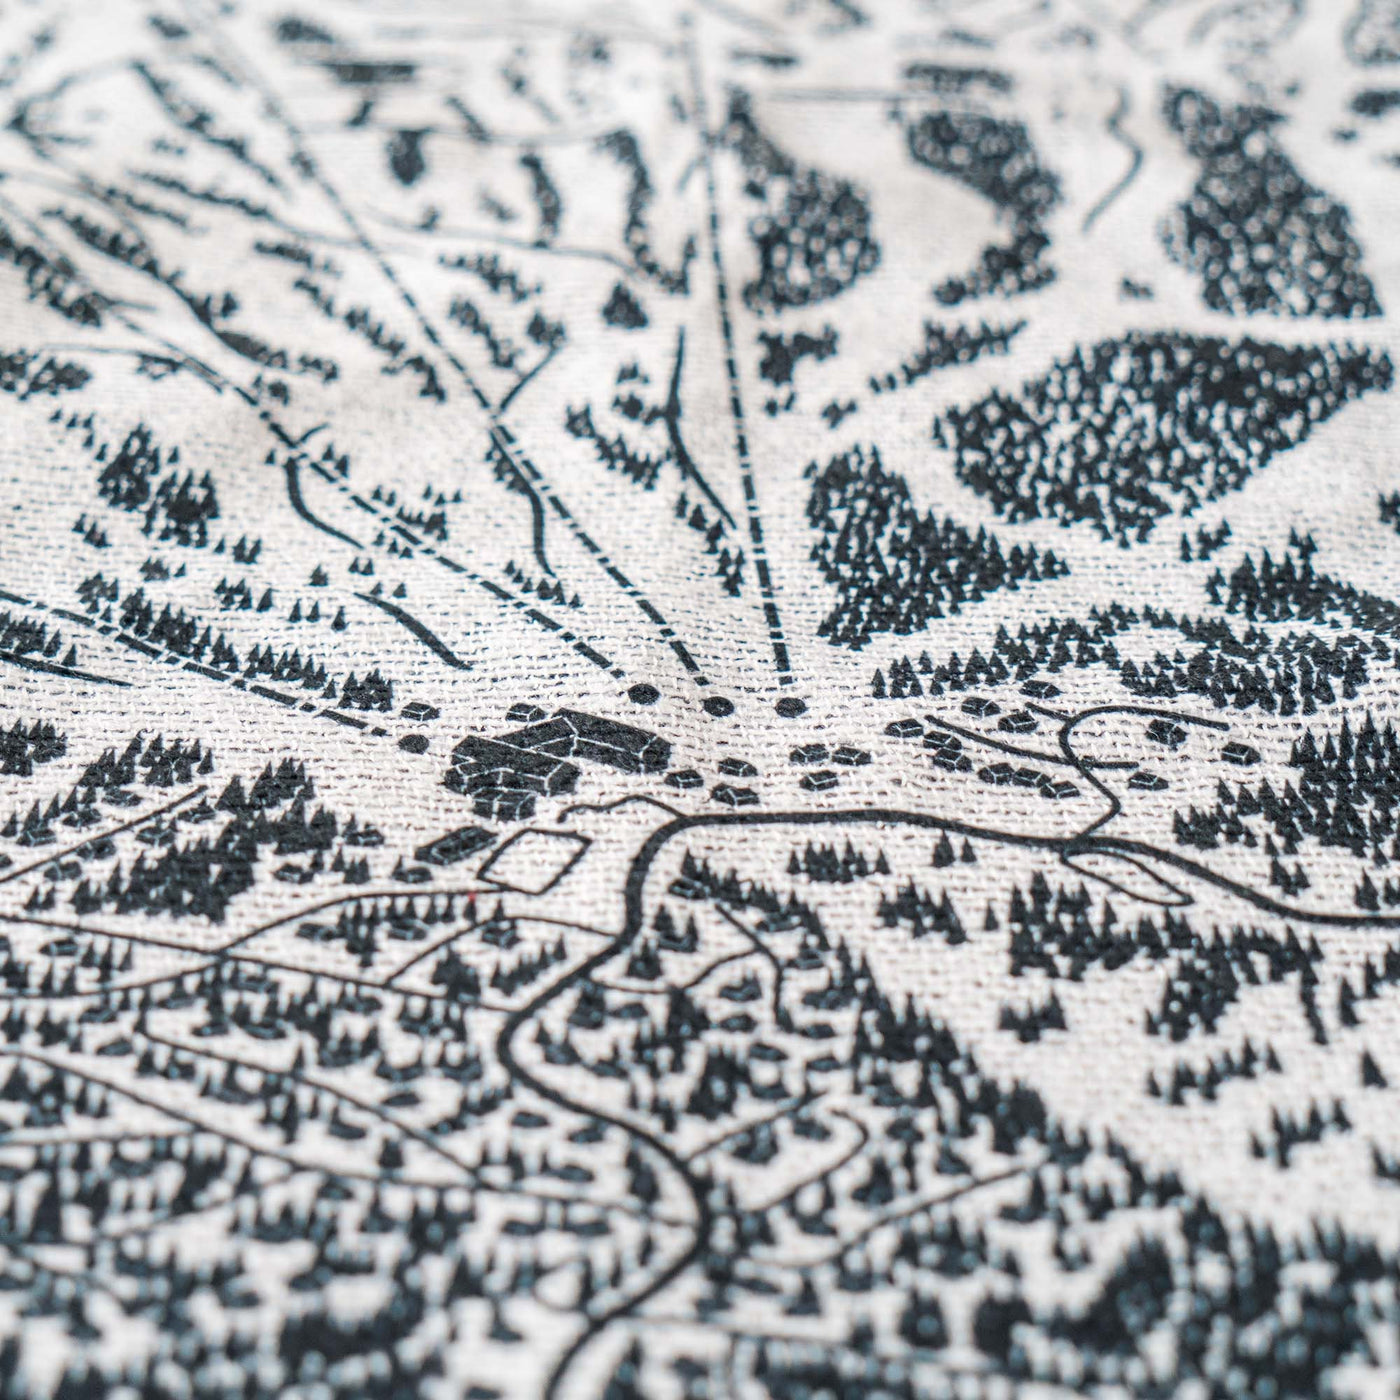 Beaver Creek, Colorado Ski Trail Map Blankets